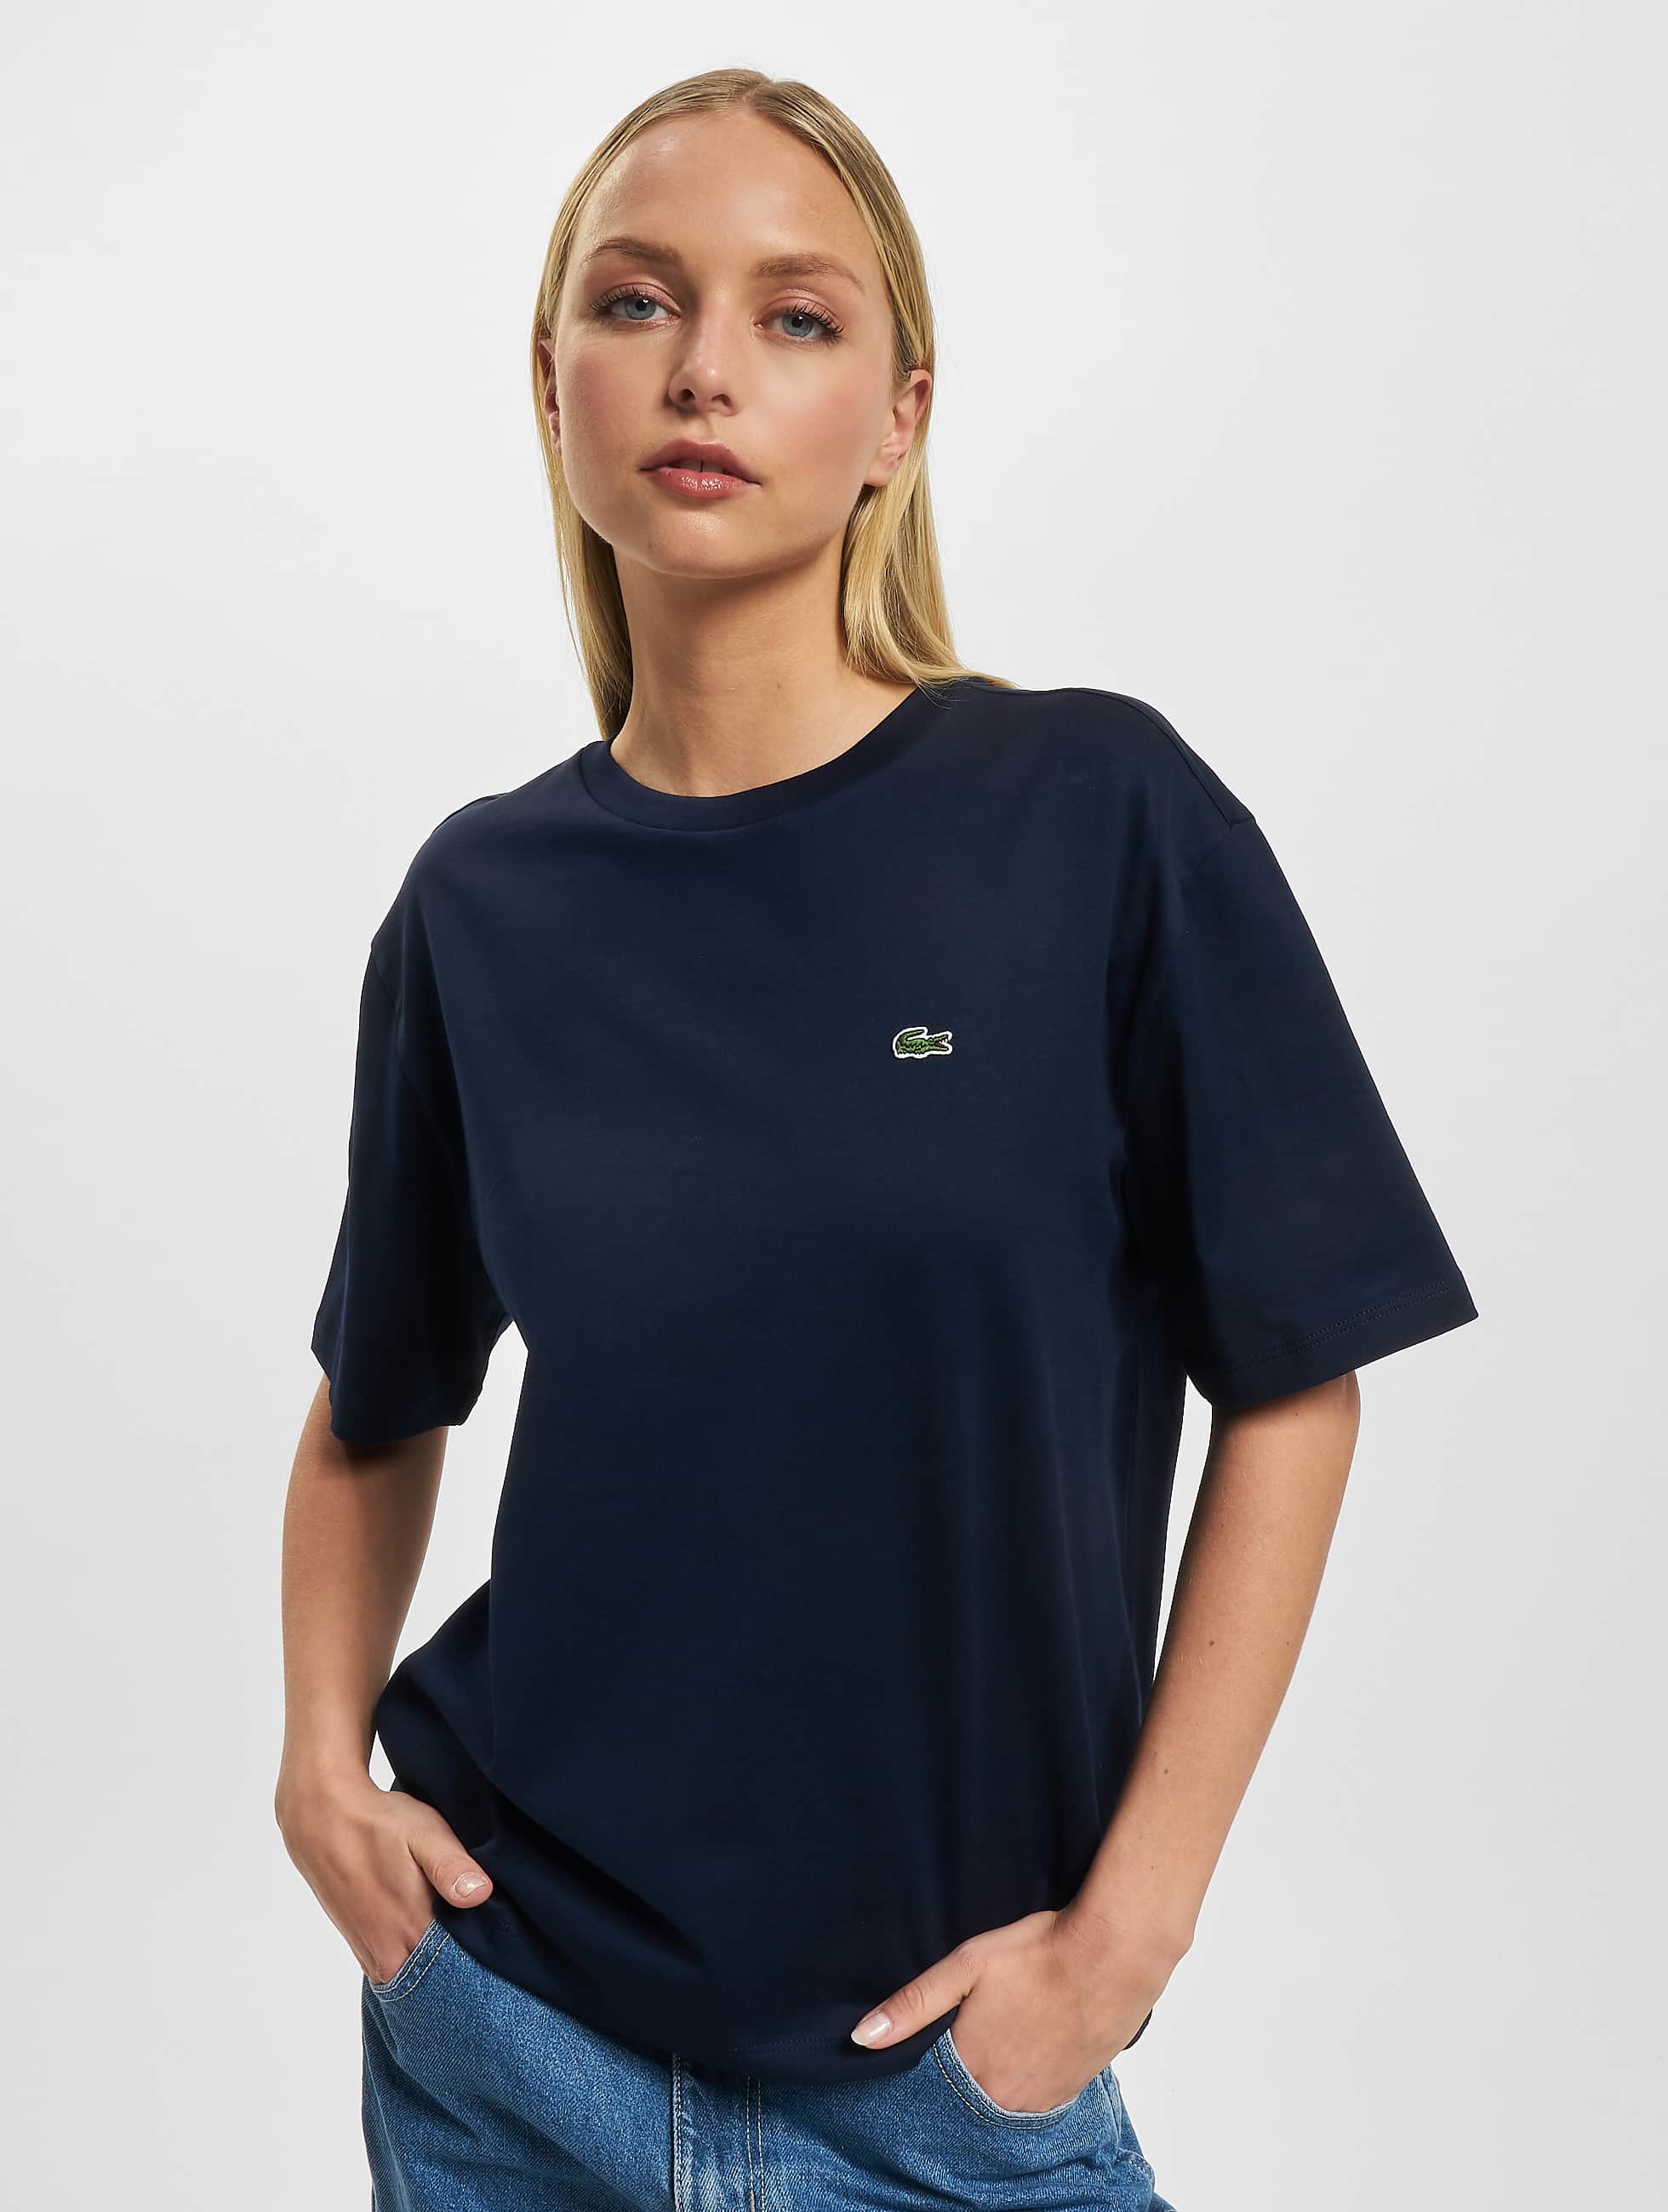 Berigelse enestående smøre Lacoste Damen T-Shirt Basic in blau 989766